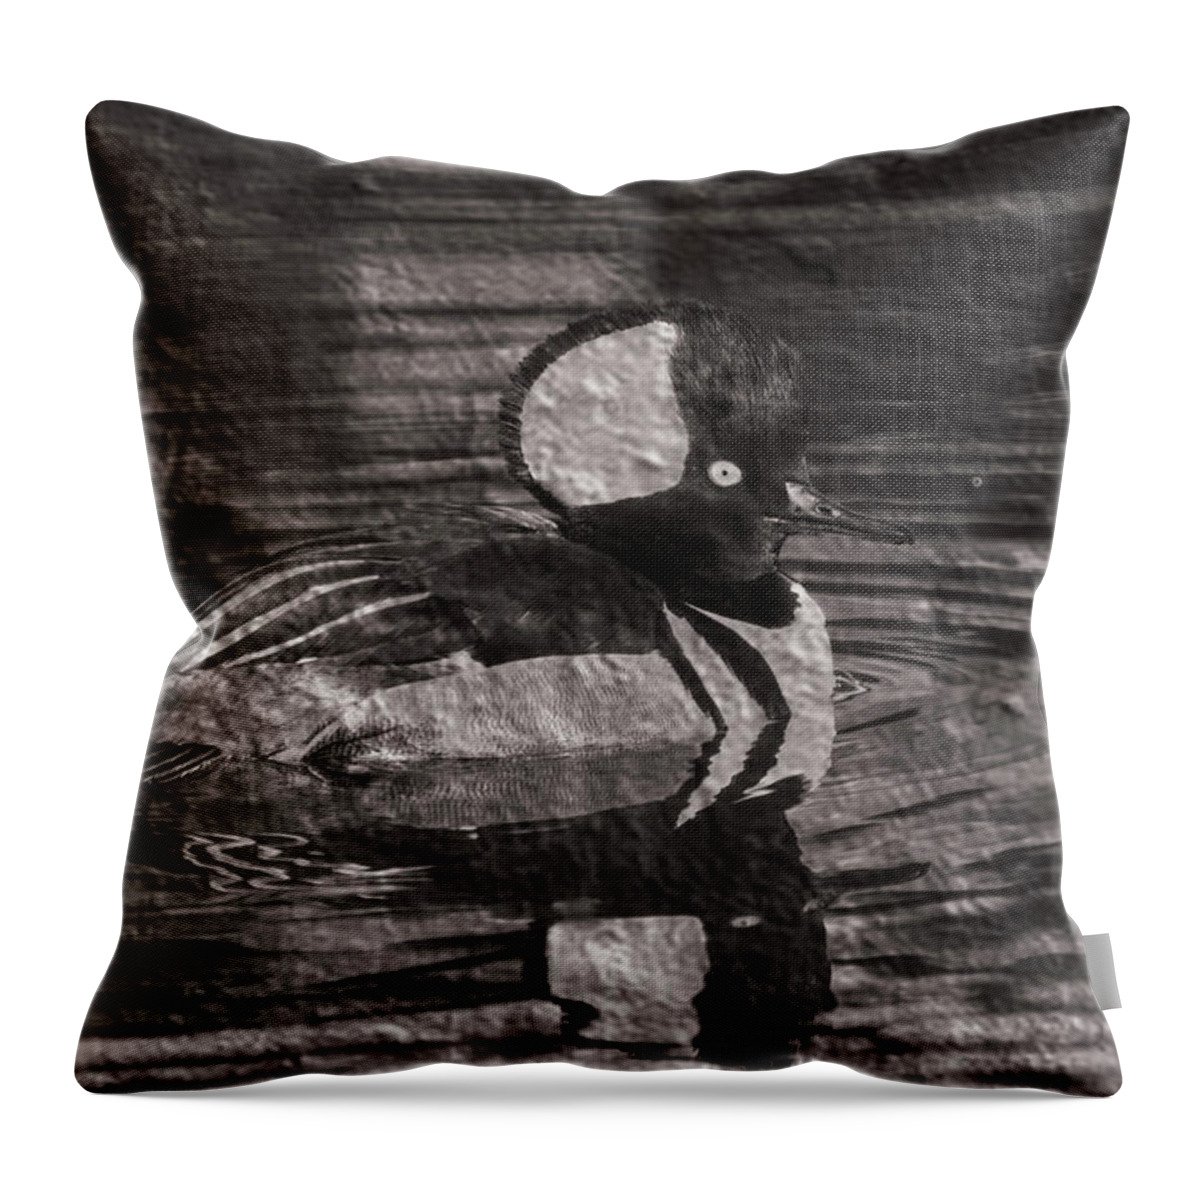 Hooded Merganser Throw Pillow featuring the photograph The Merganser by Ernest Echols